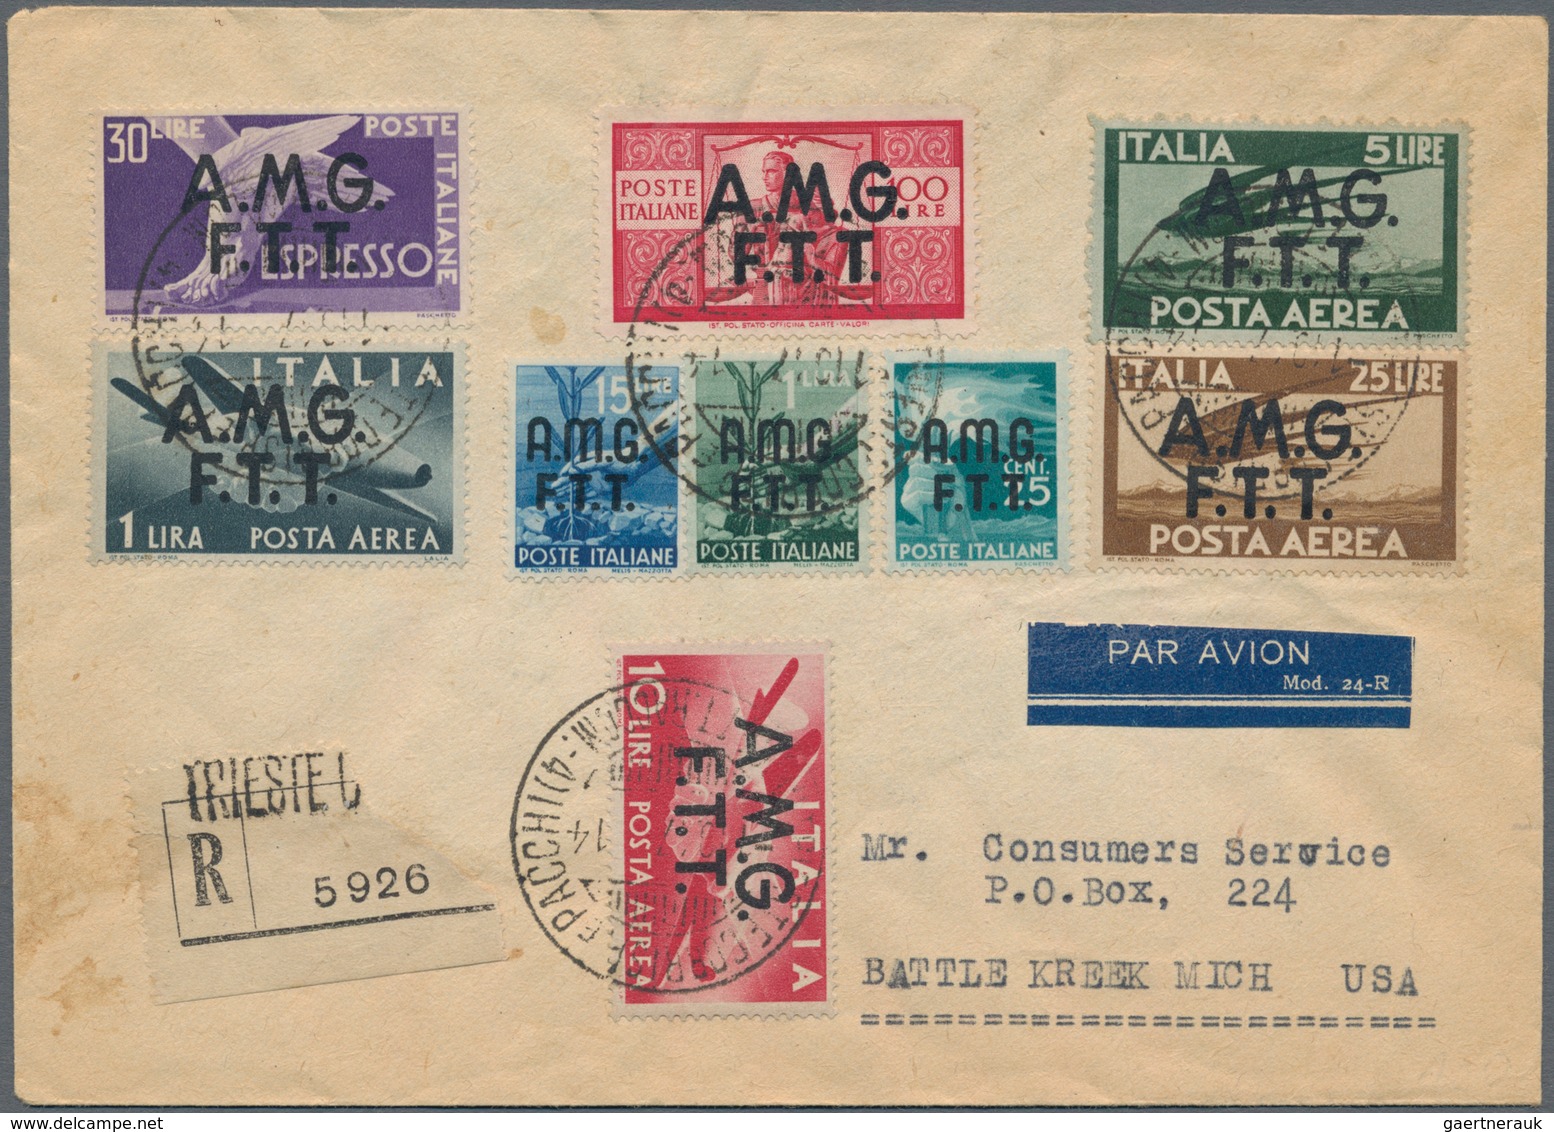 Triest - Zone A: 1947, 25 Cmi, 1 L, 15 L And 100 L Definitives, 1 L, 5 L, 10 L And 25 L Airmail Stam - Poststempel